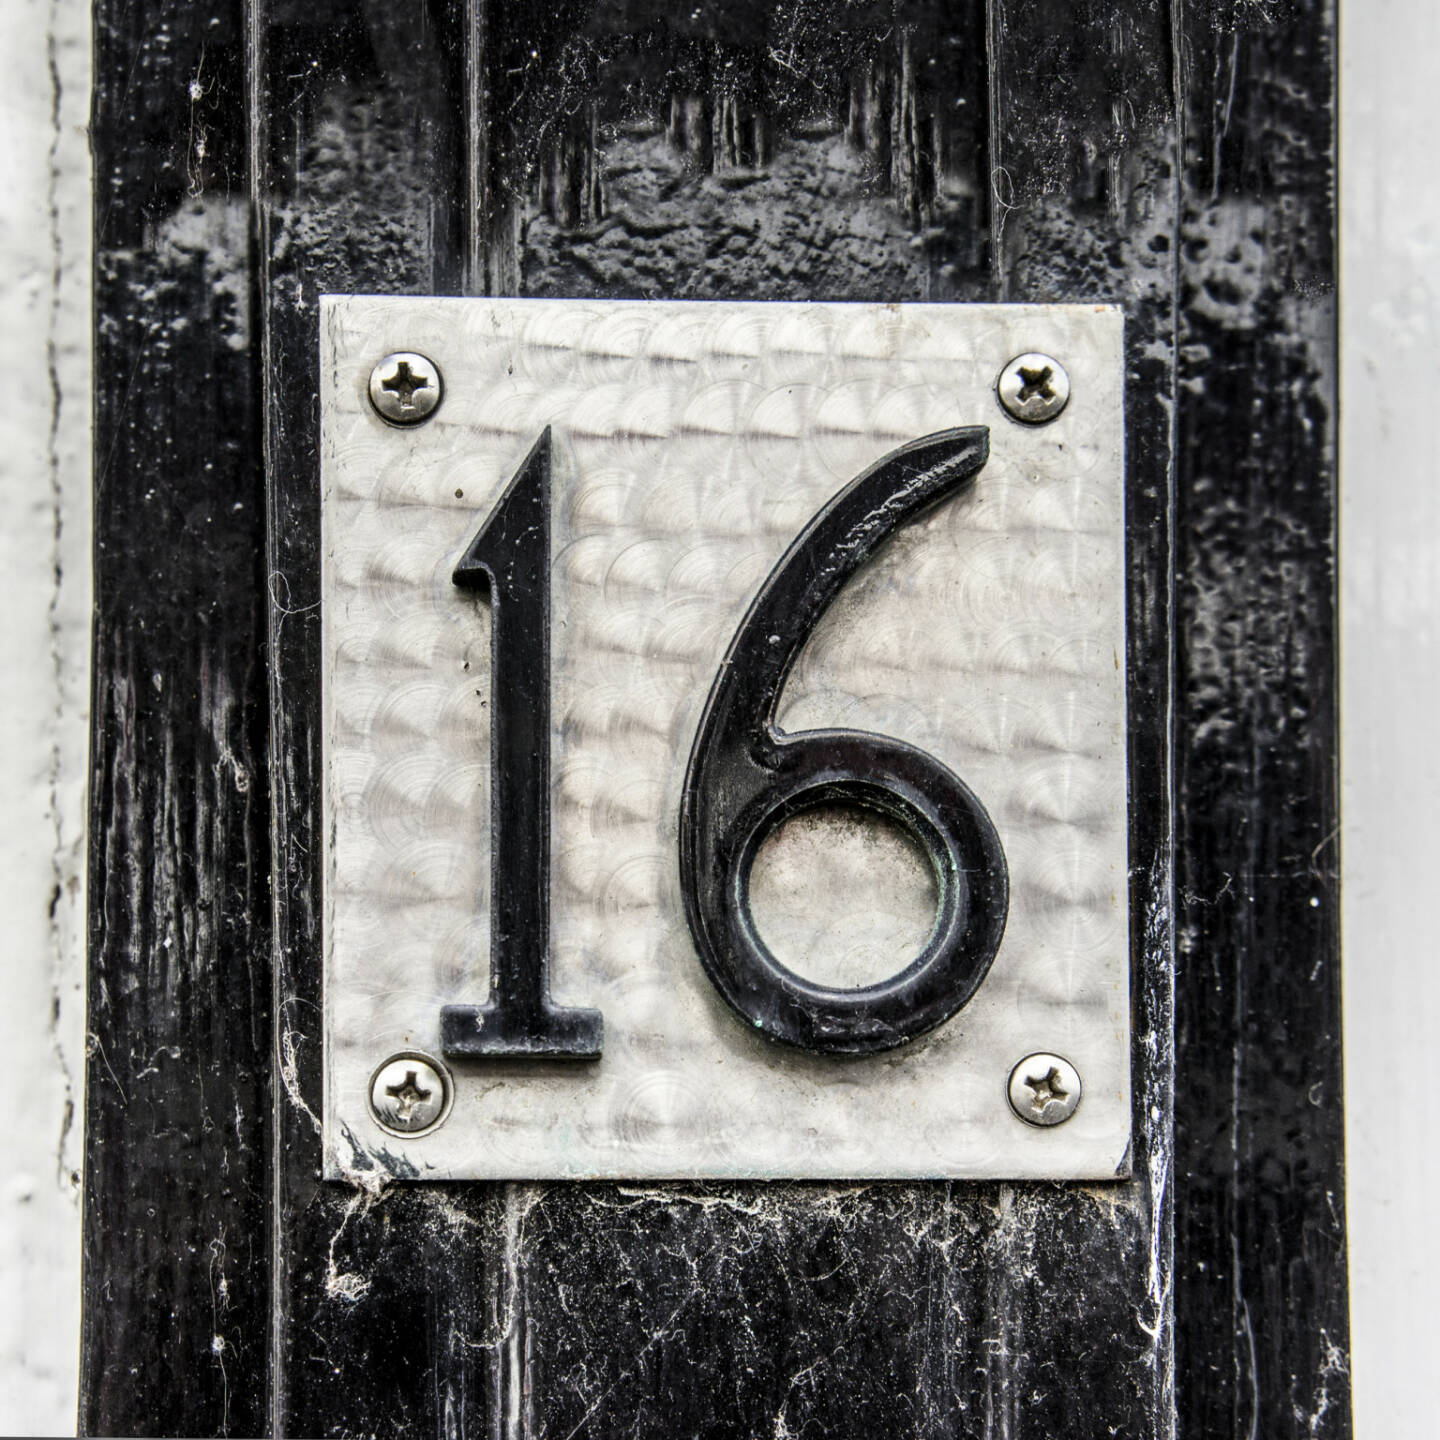 sechzehn - 16 - https://de.depositphotos.com/23201084/stock-photo-house-number-16.html